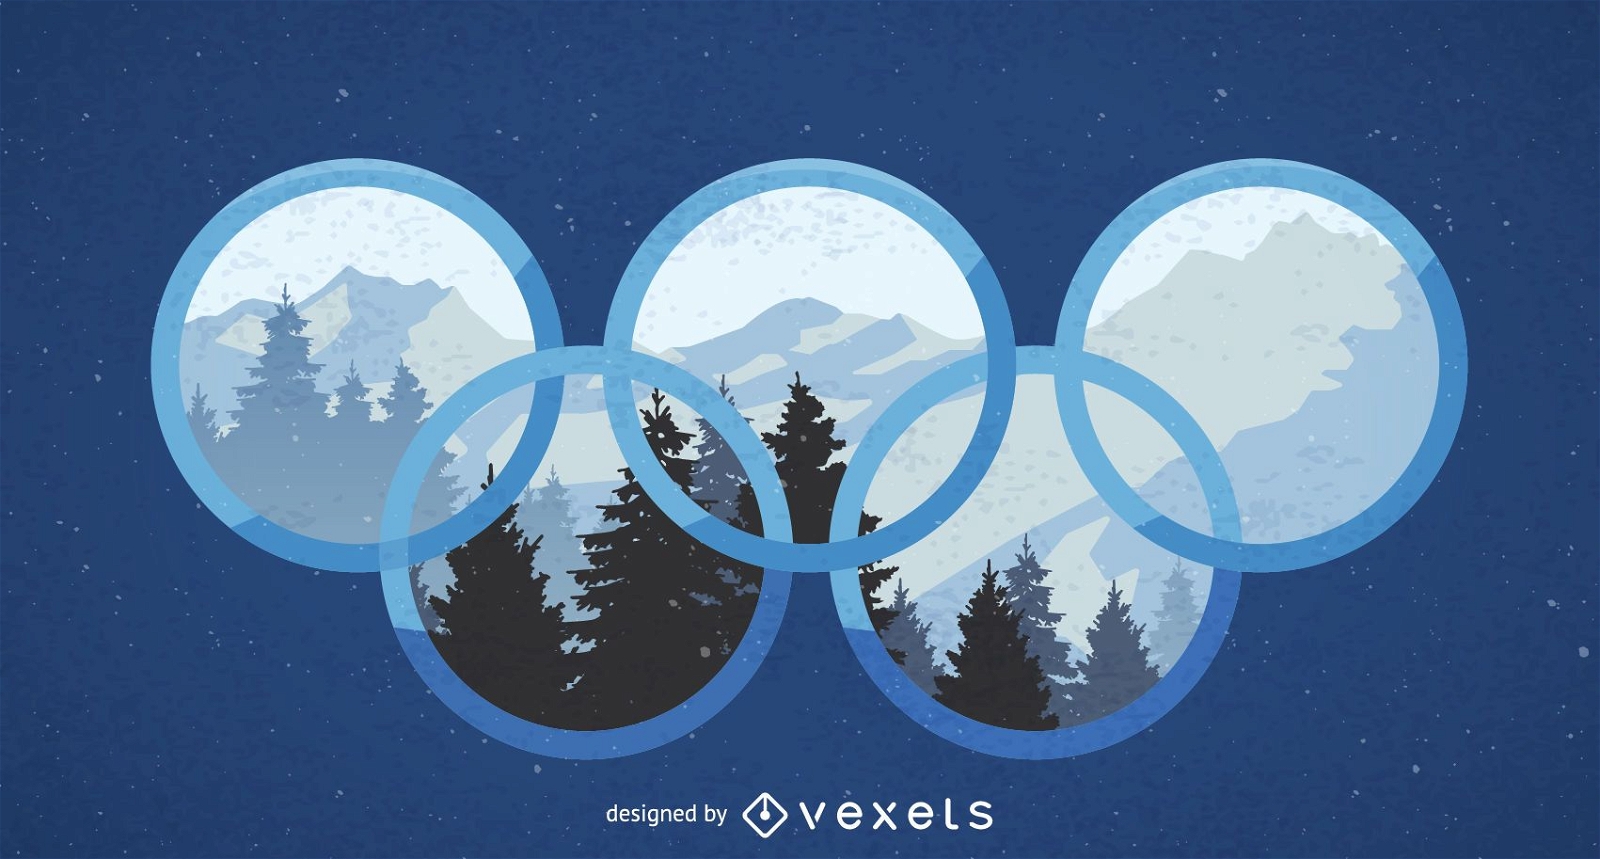 Winter Olympics 2018 design